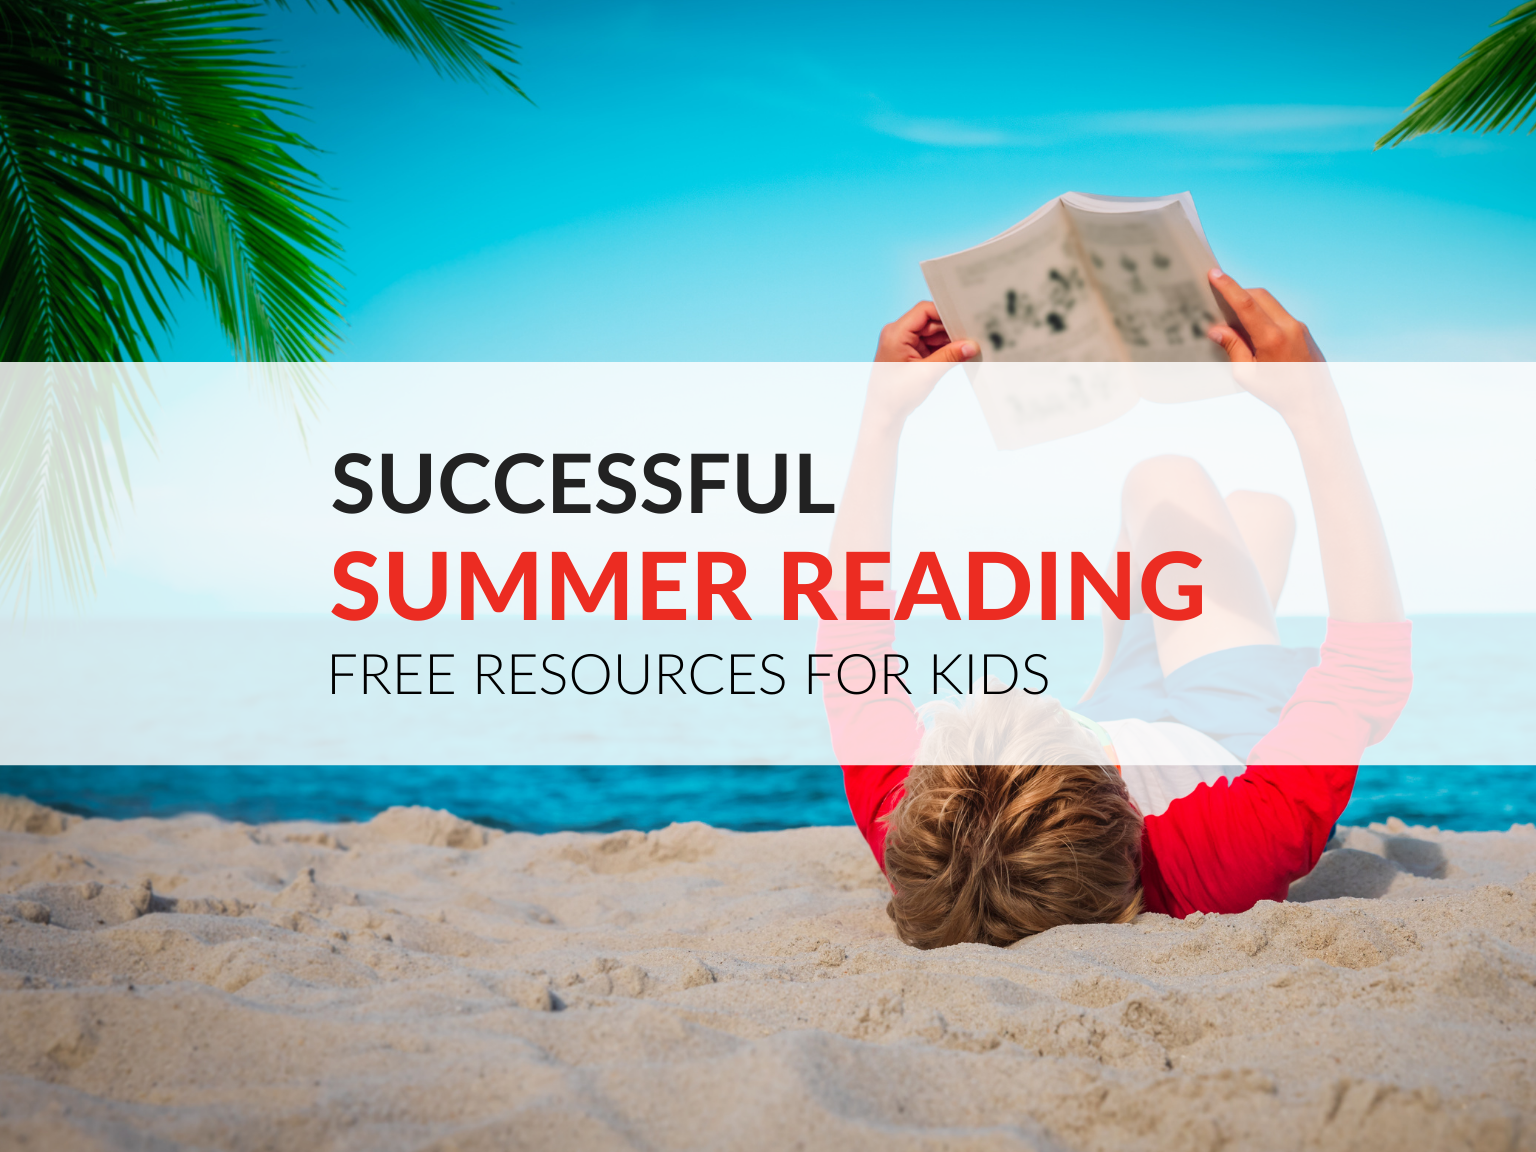 https://www.sadlier.com/hs-fs/hubfs/2021-summer-reading-resources-free-printables-pdfs-summer-reading-log.png?width=1536&name=2021-summer-reading-resources-free-printables-pdfs-summer-reading-log.png